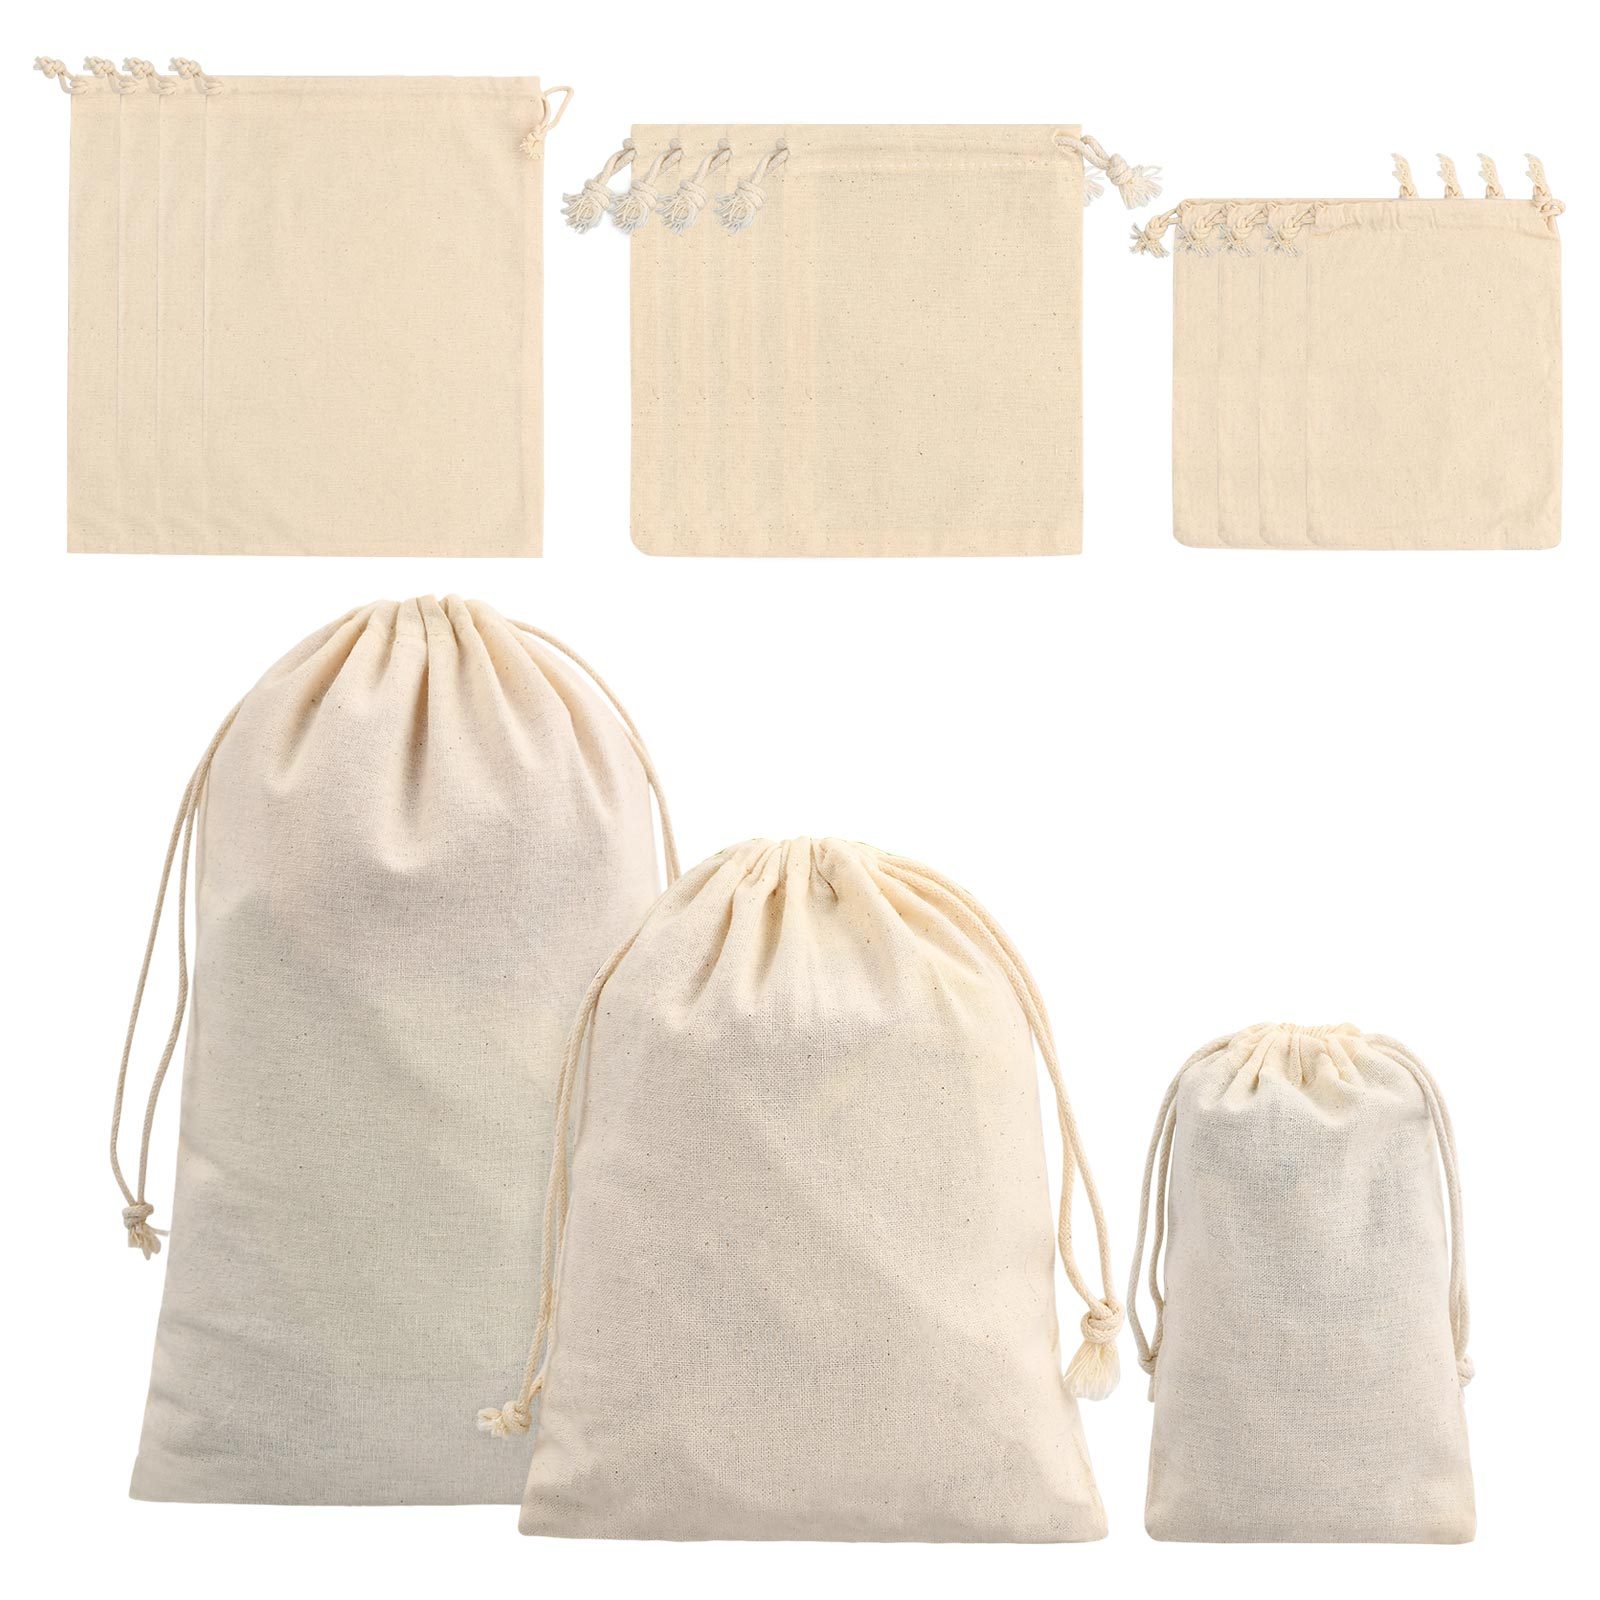 Bolsas pequeñas de tela de saco